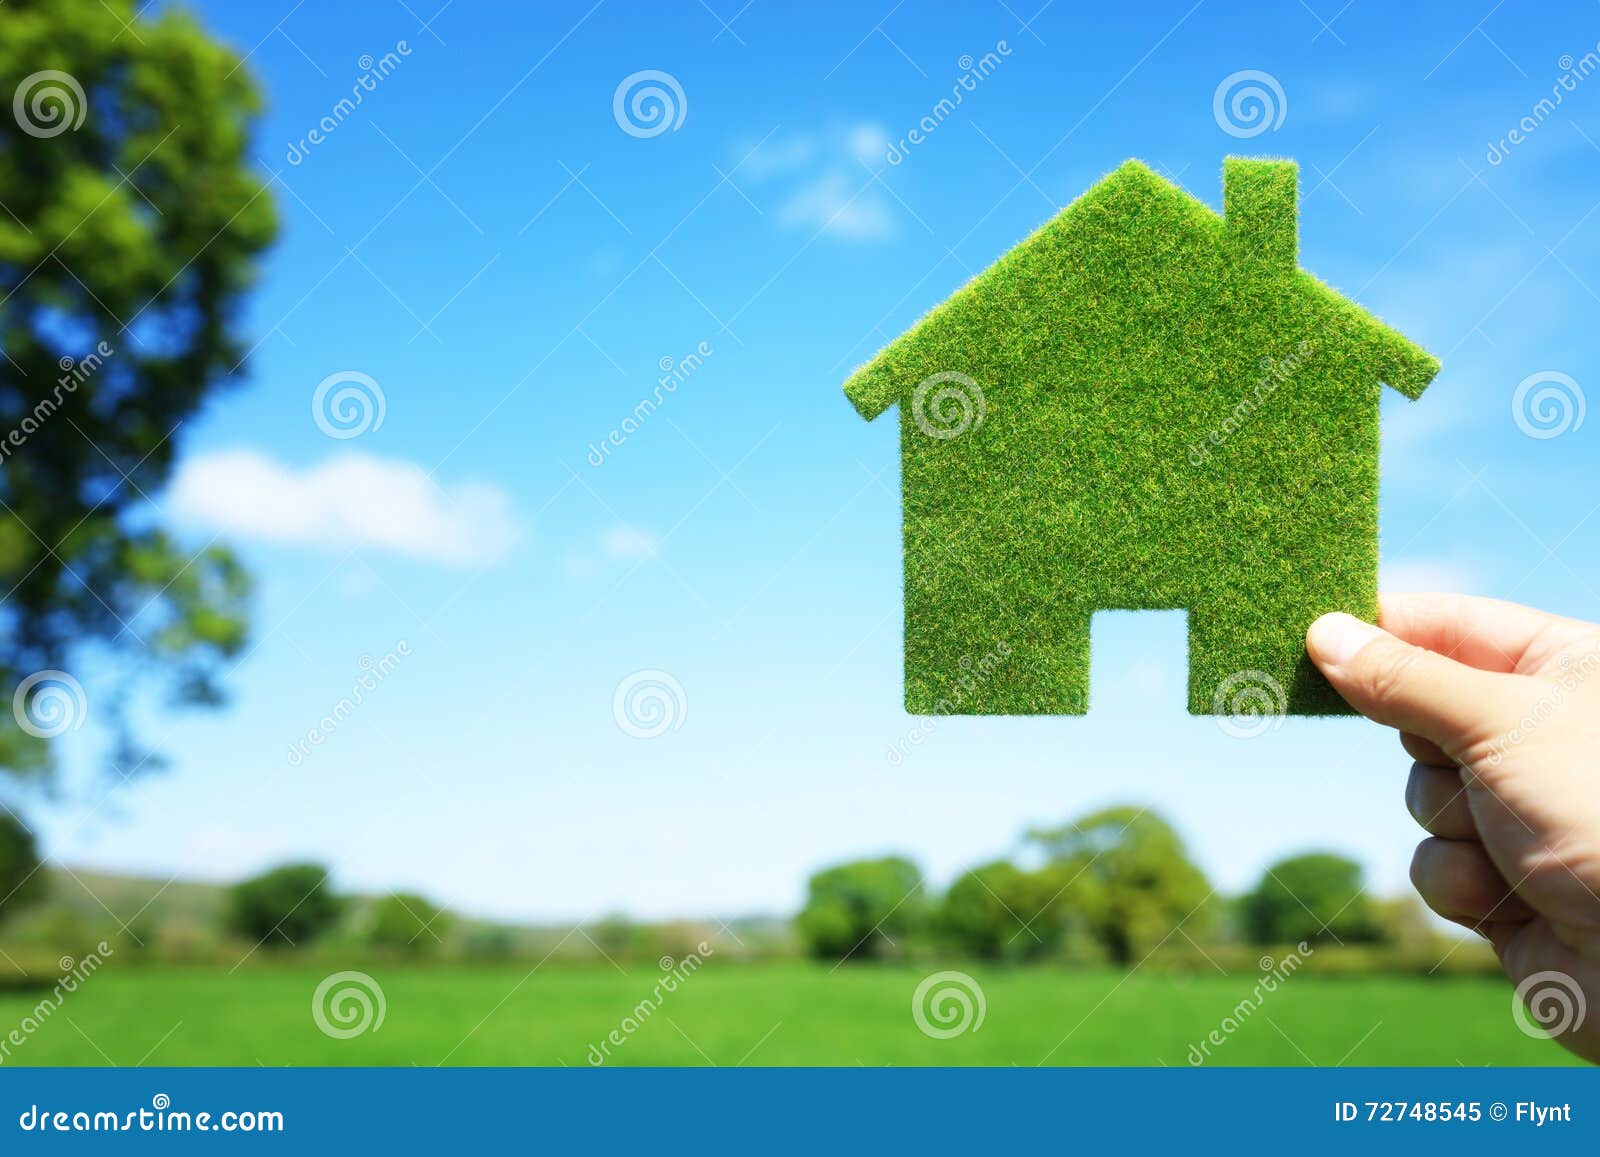 green ecological house in empty field